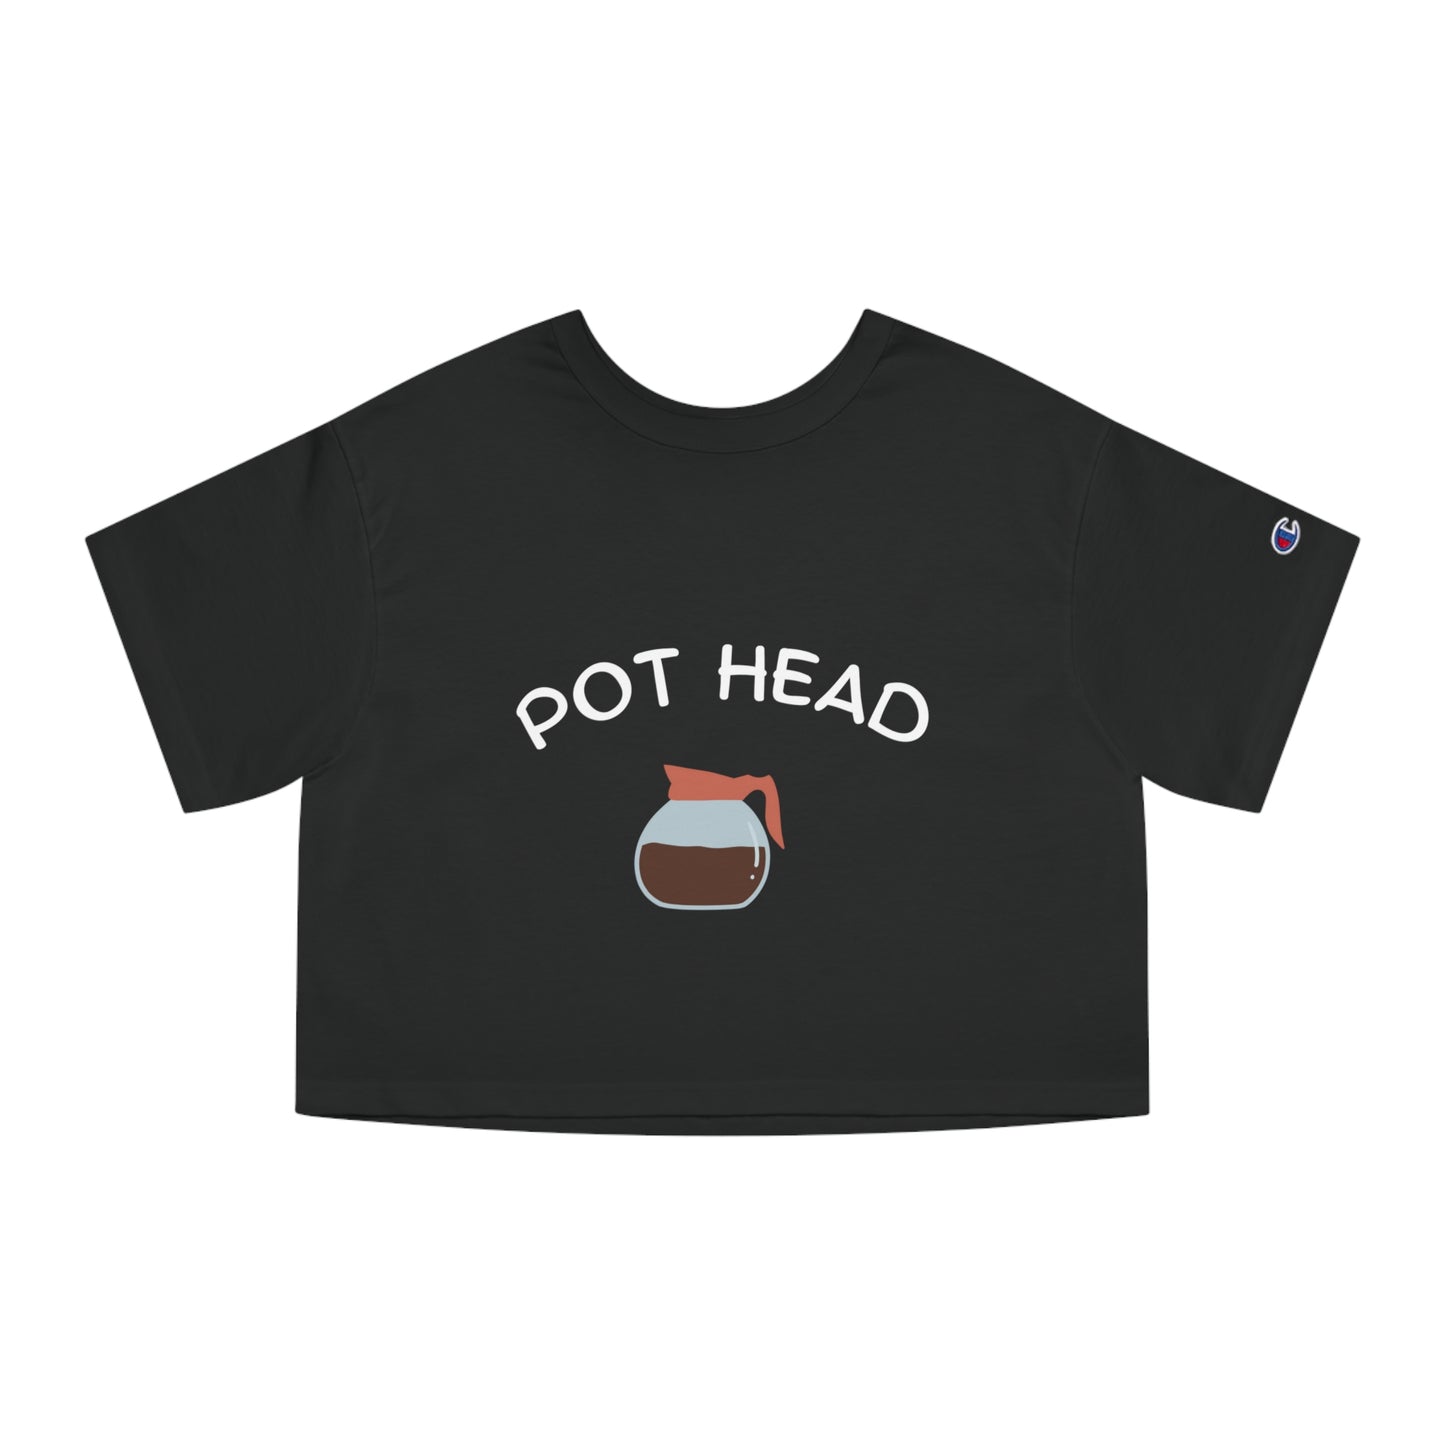 "Pot Head" - Champion crop top